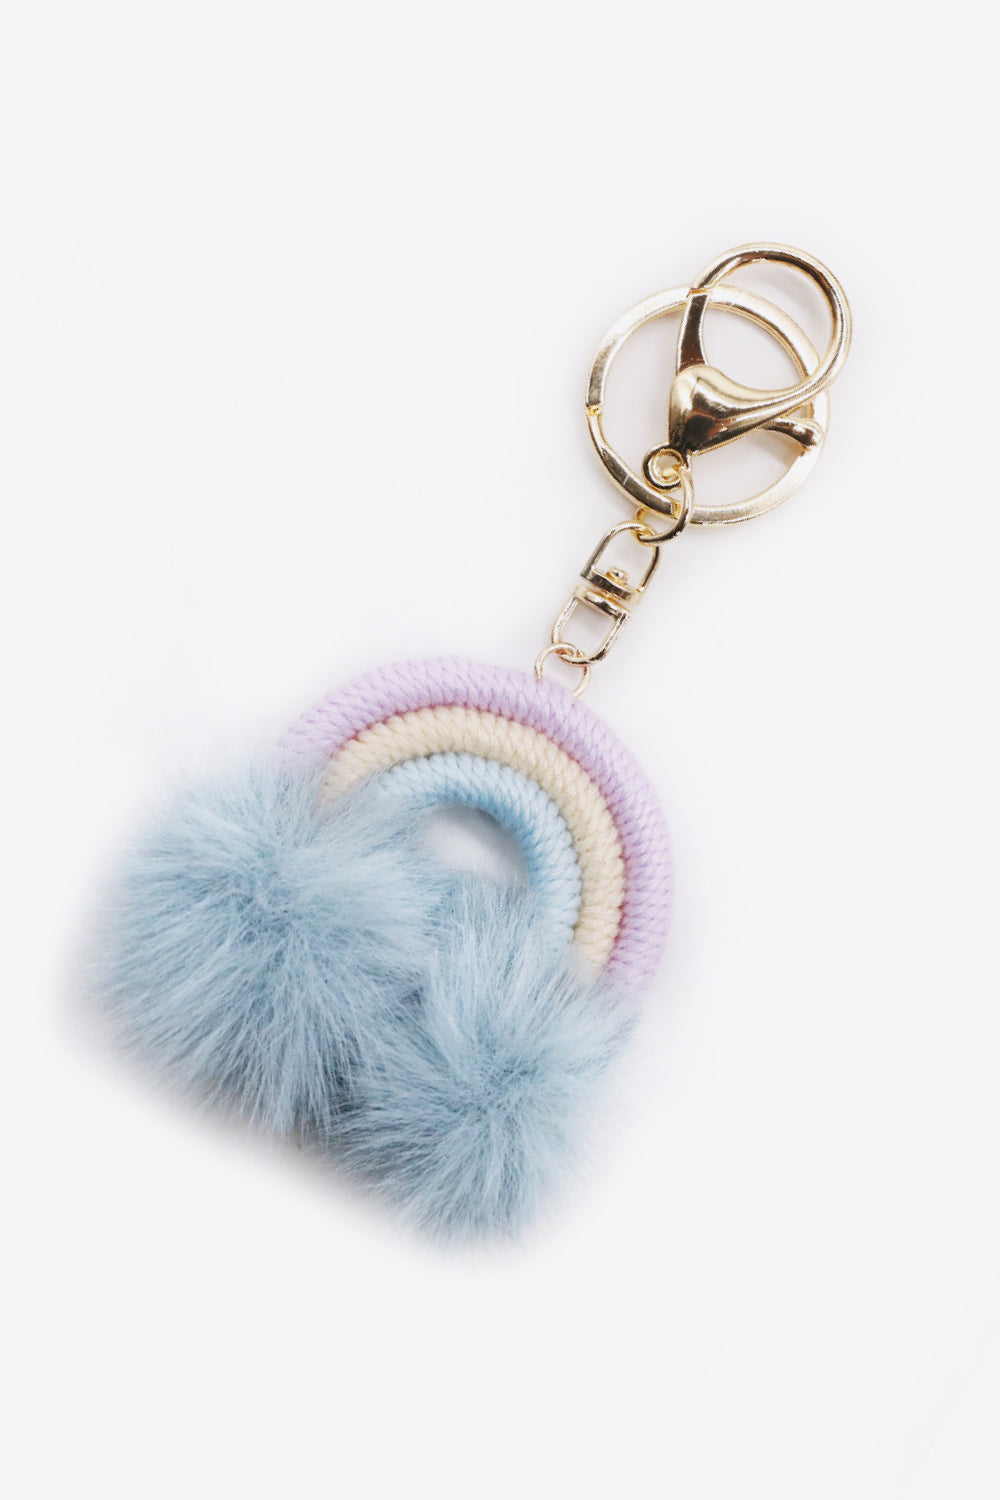 Trendsi Cupid Beauty Supplies Keychains Assorted 4-Pack Rainbow Pom Pom Keychain